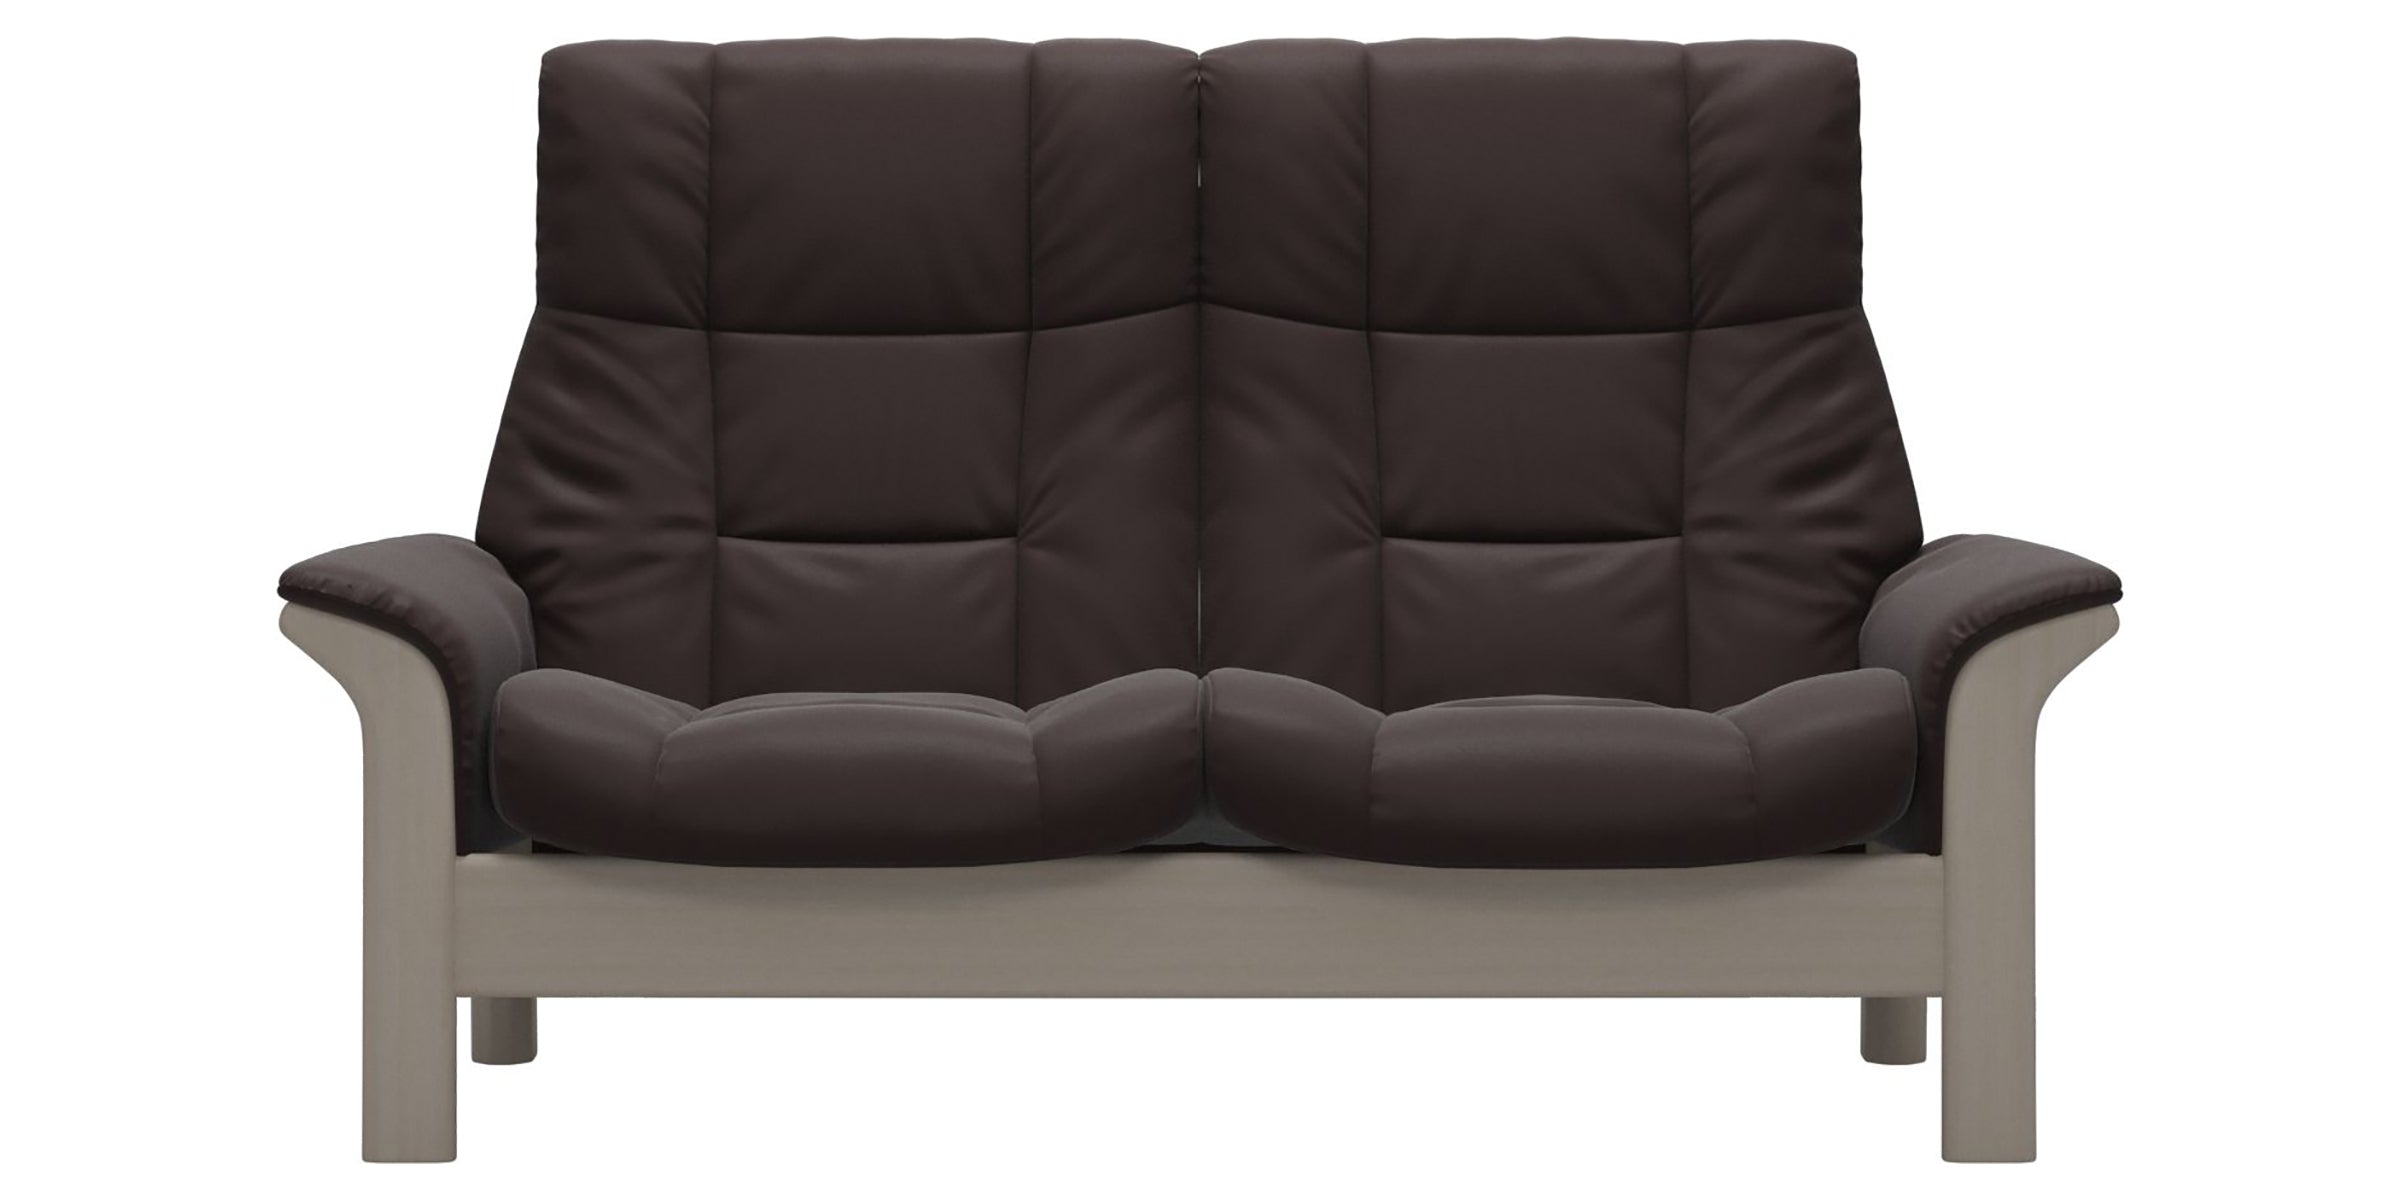 Paloma Leather Chocolate and Whitewash Base | Stressless Buckingham 2-Seater High Back Sofa | Valley Ridge Furniture